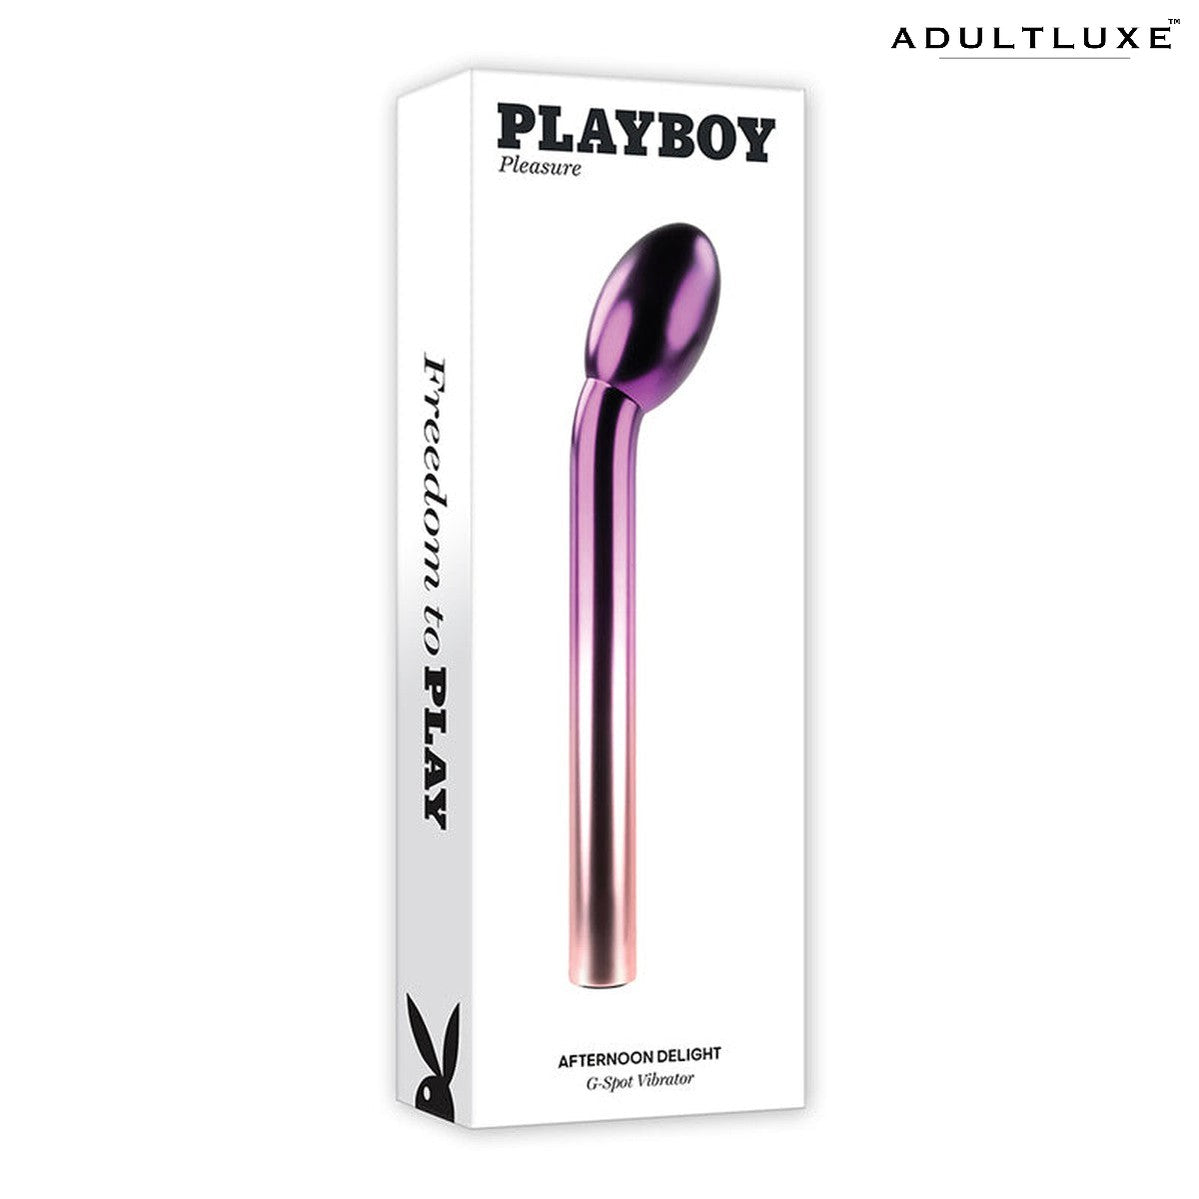 Playboy Afternoon Delight G-Spot Vibrator